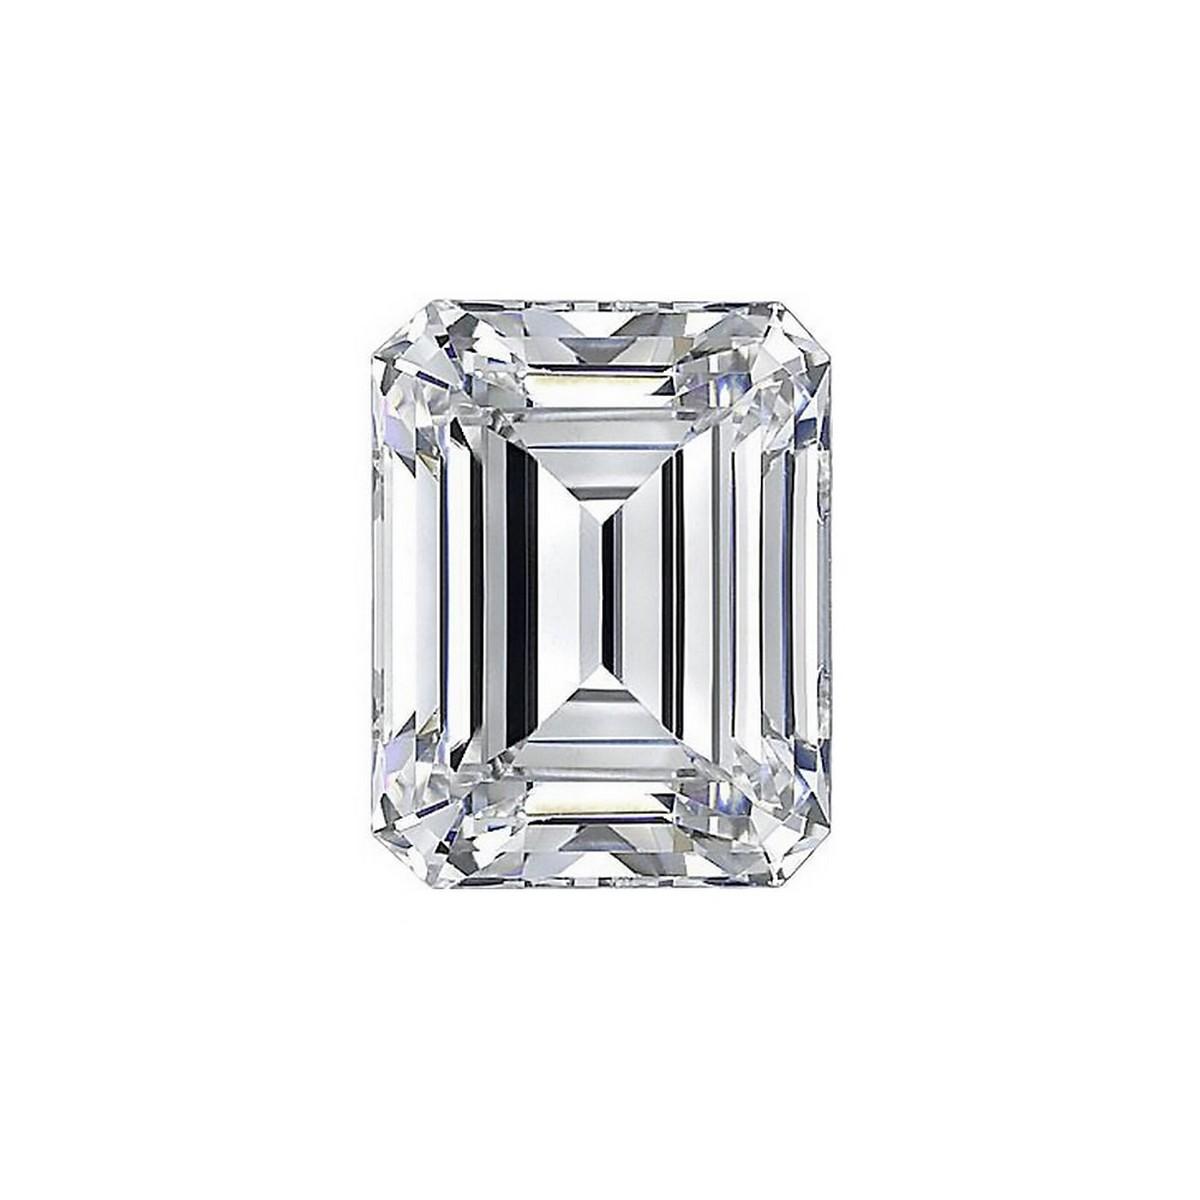 1.71 ctw. VS2 IGI Certified Emerald Cut Loose Diamond (LAB GROWN)